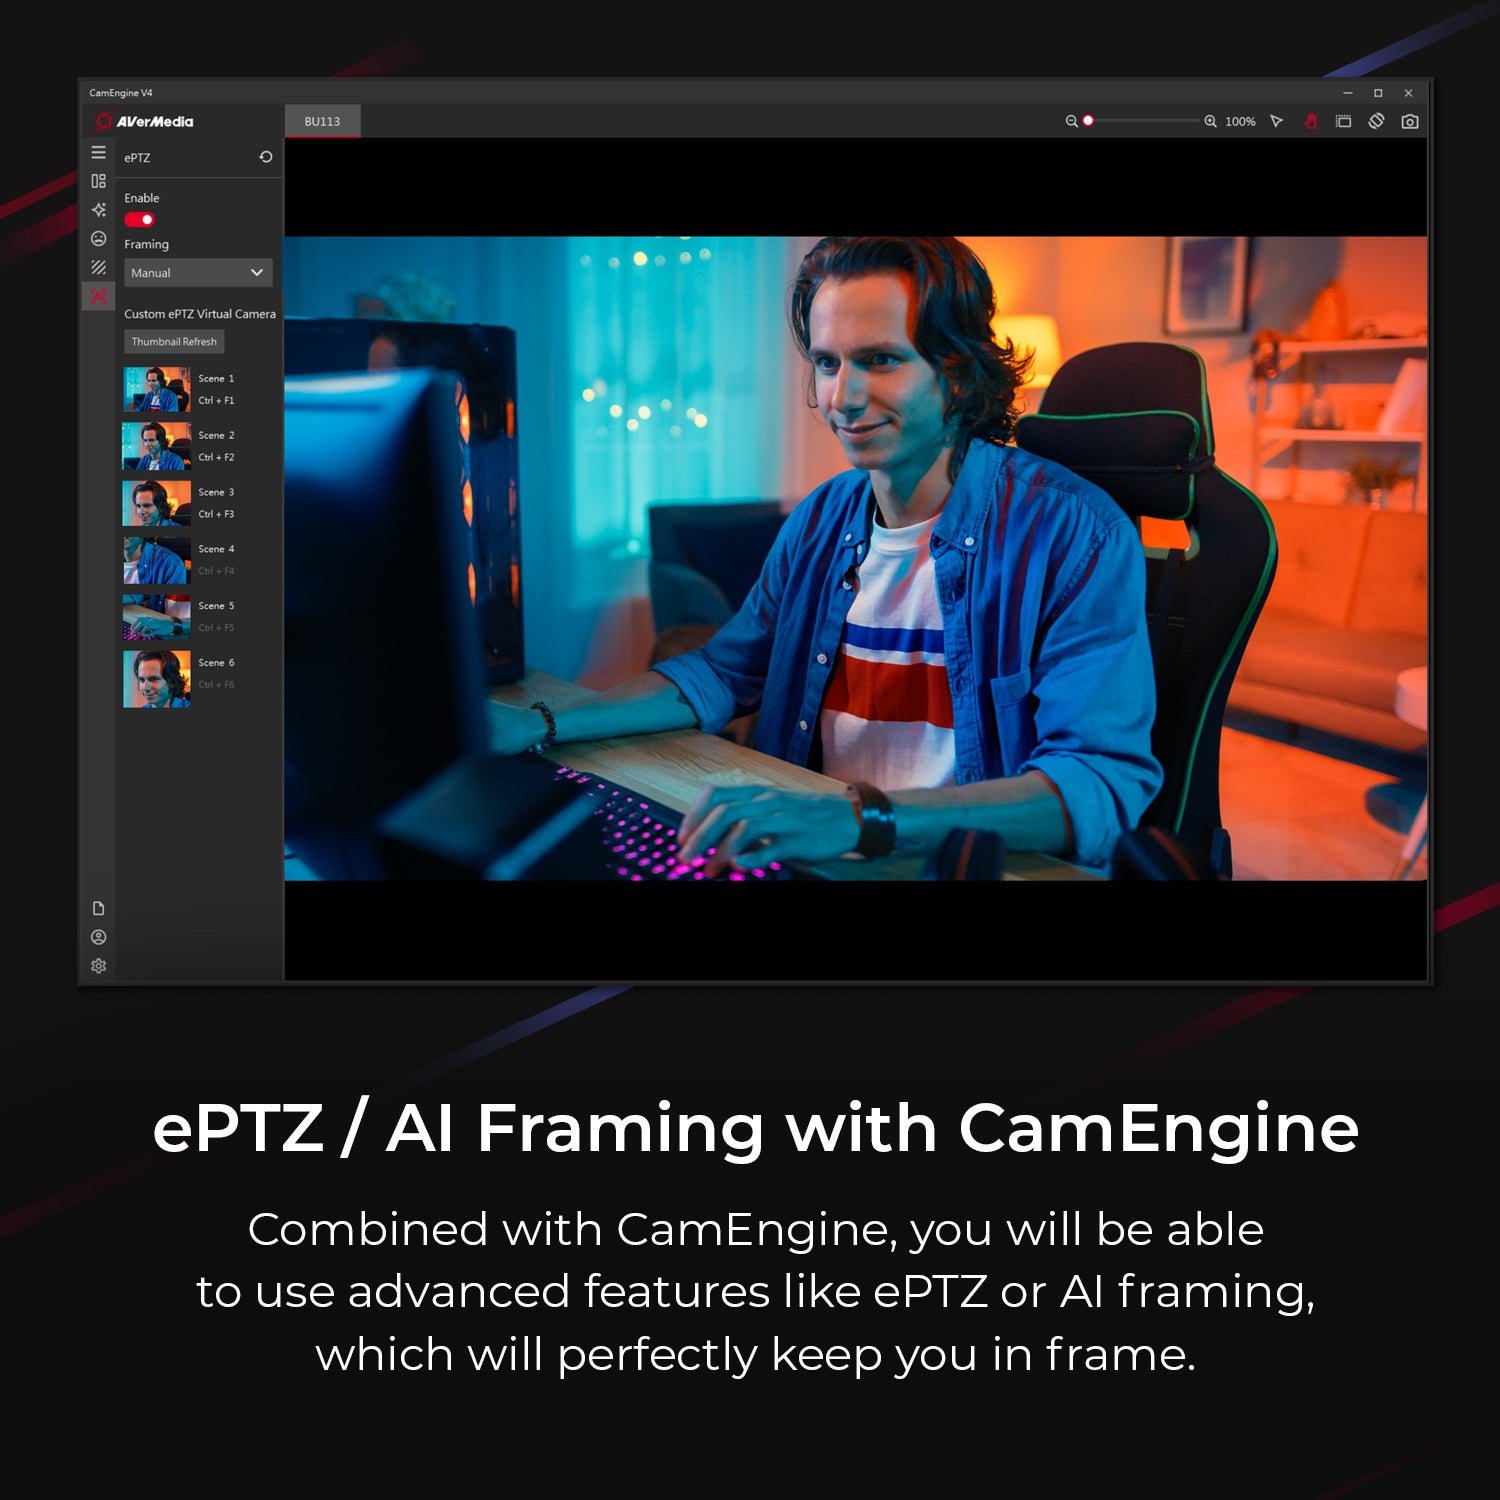 AVerMedia CamEngine with AI Framing and ePTZ